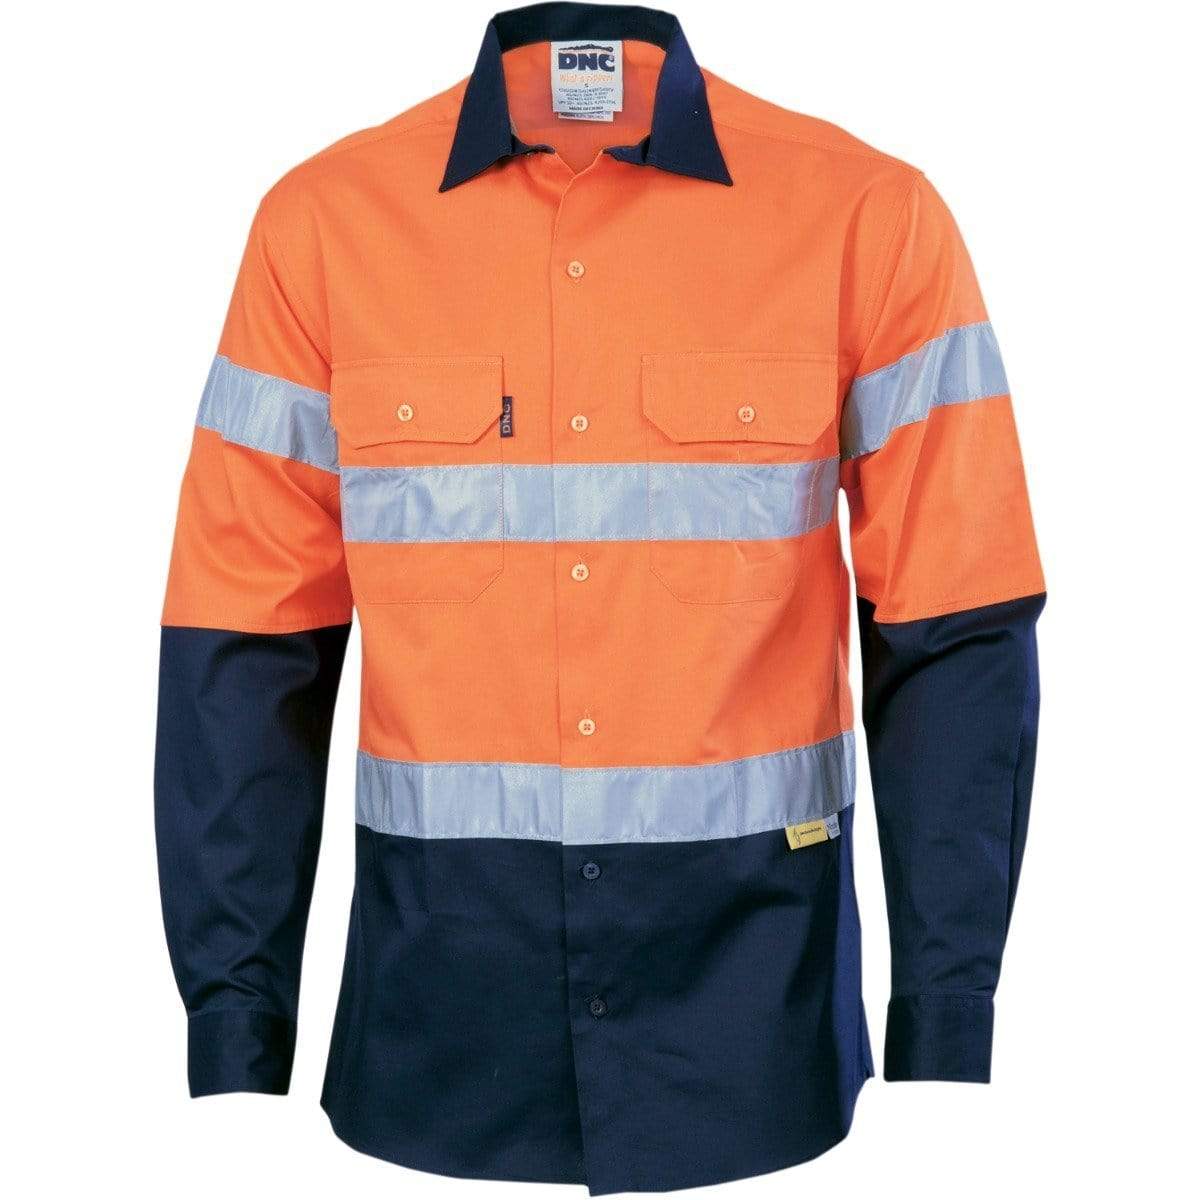 Dnc Workwear Hi-vis Two Tone Drill Long Sleeve Shirt With 3m 8910 Reflective Tape - 3836 Work Wear DNC Workwear Orange/Navy S 